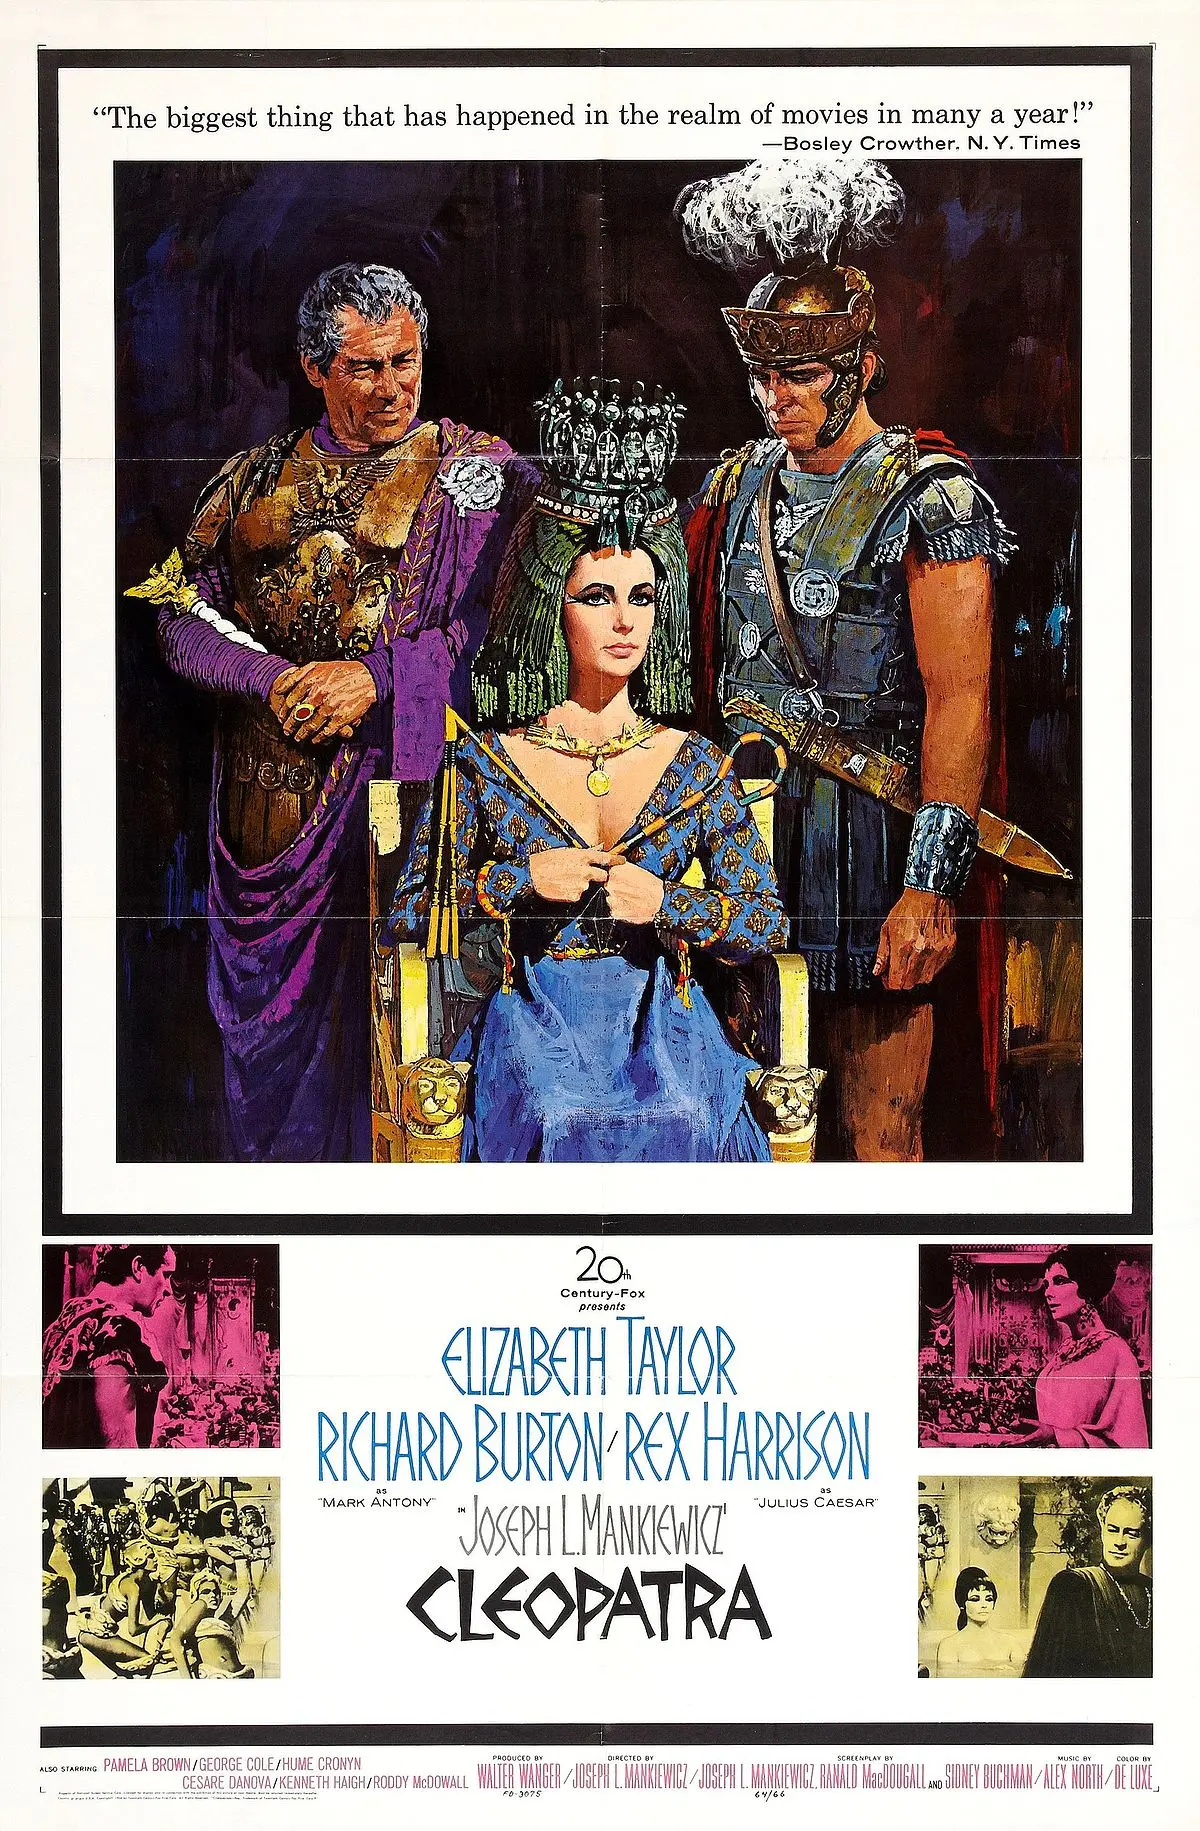 resumen de la pelicula cleopatra - Quién fue la protagonista de Cleopatra